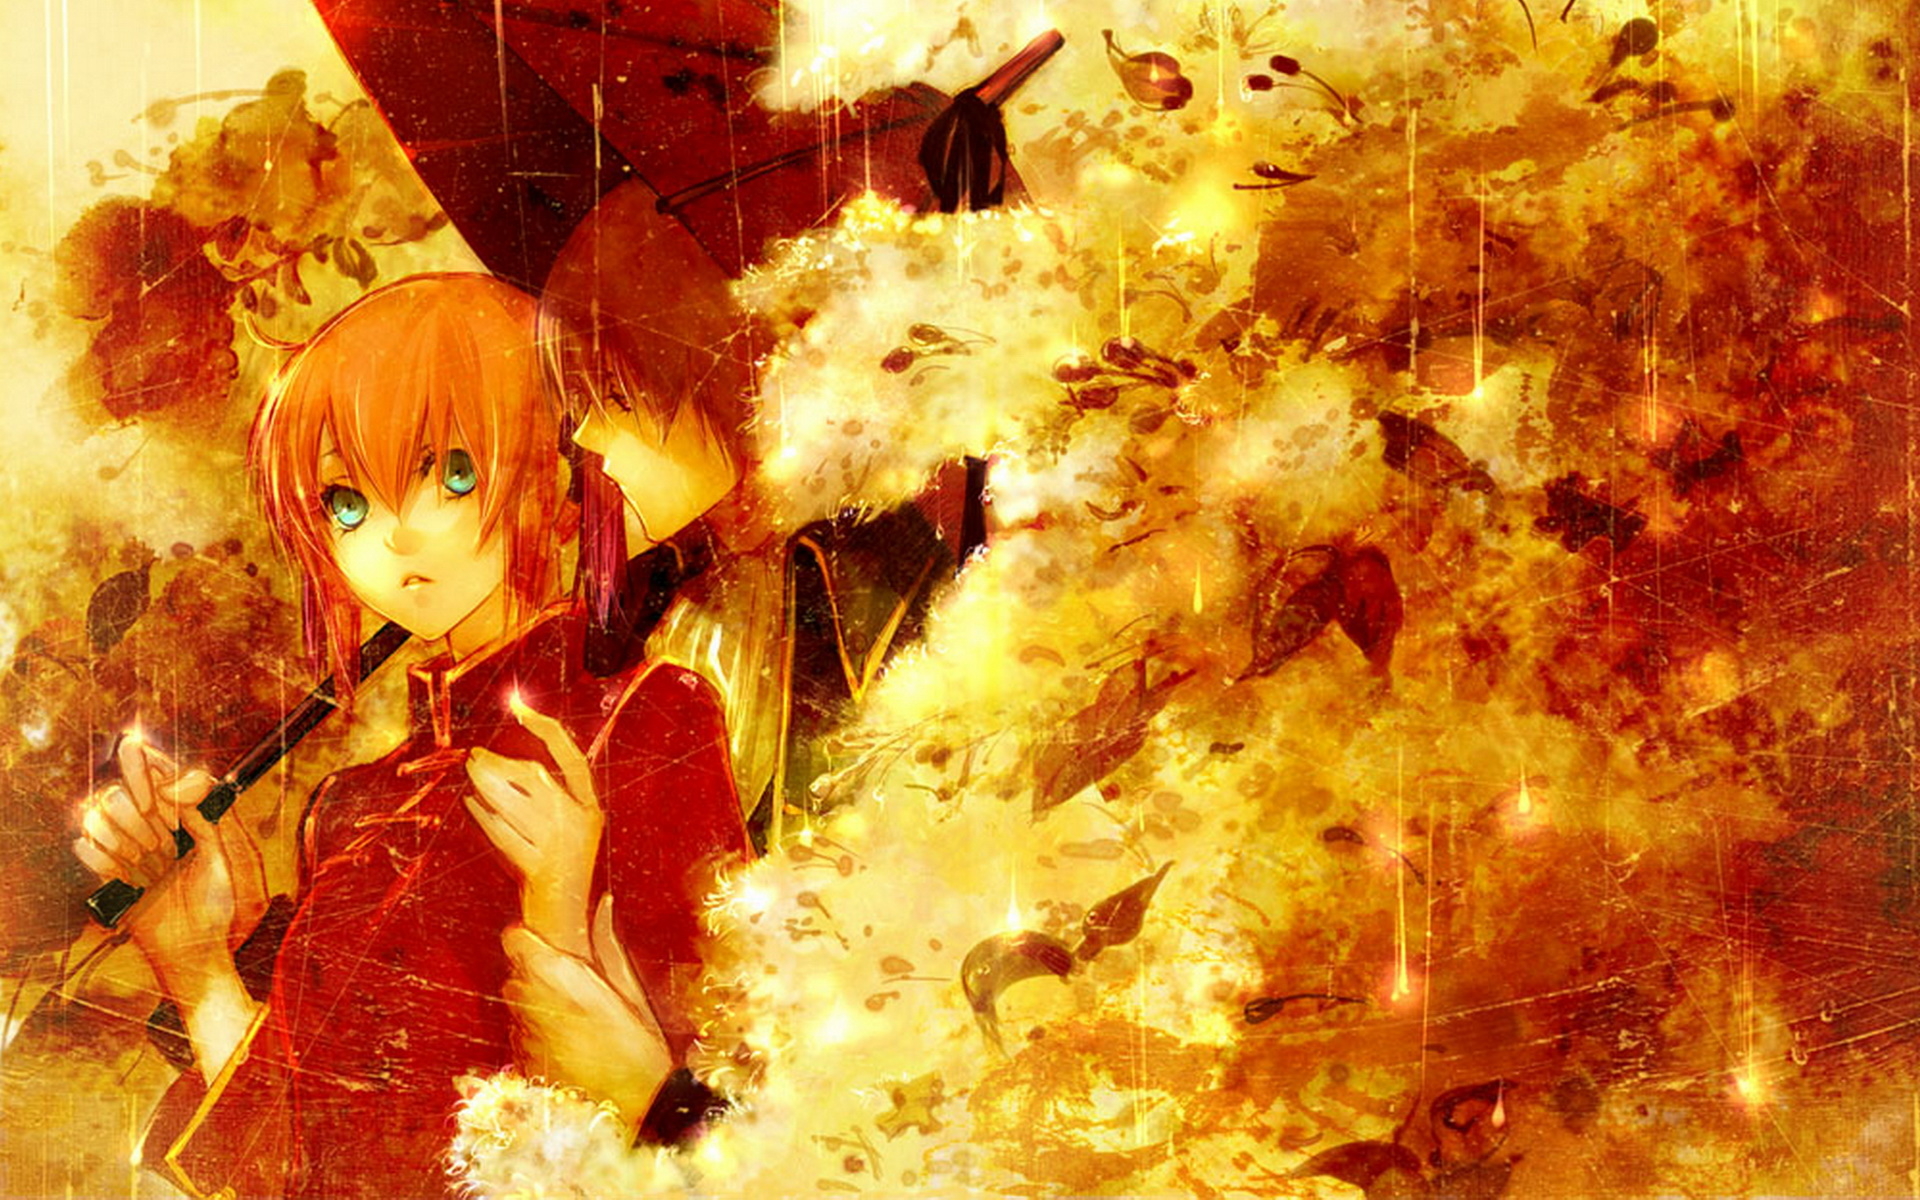 Download wallpaper 1152x864 autumn leaves beautiful anime girl original  standard 43 fullscreen 1152x864 hd background 26608